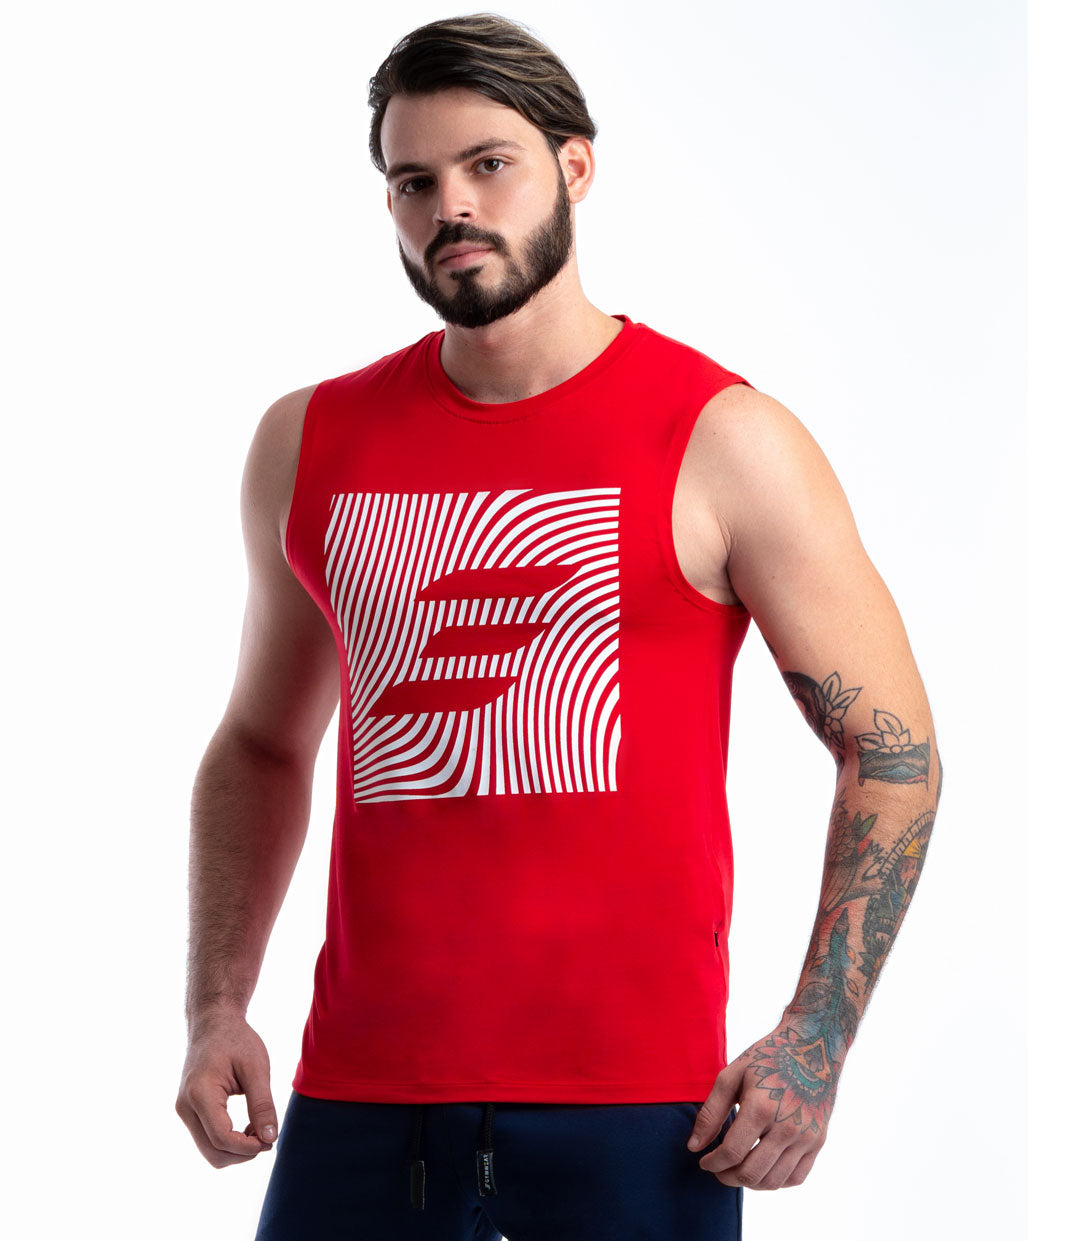 Camiseta Sisa Deportiva Para Hombre Roja 0506R | Colombian Gymwear